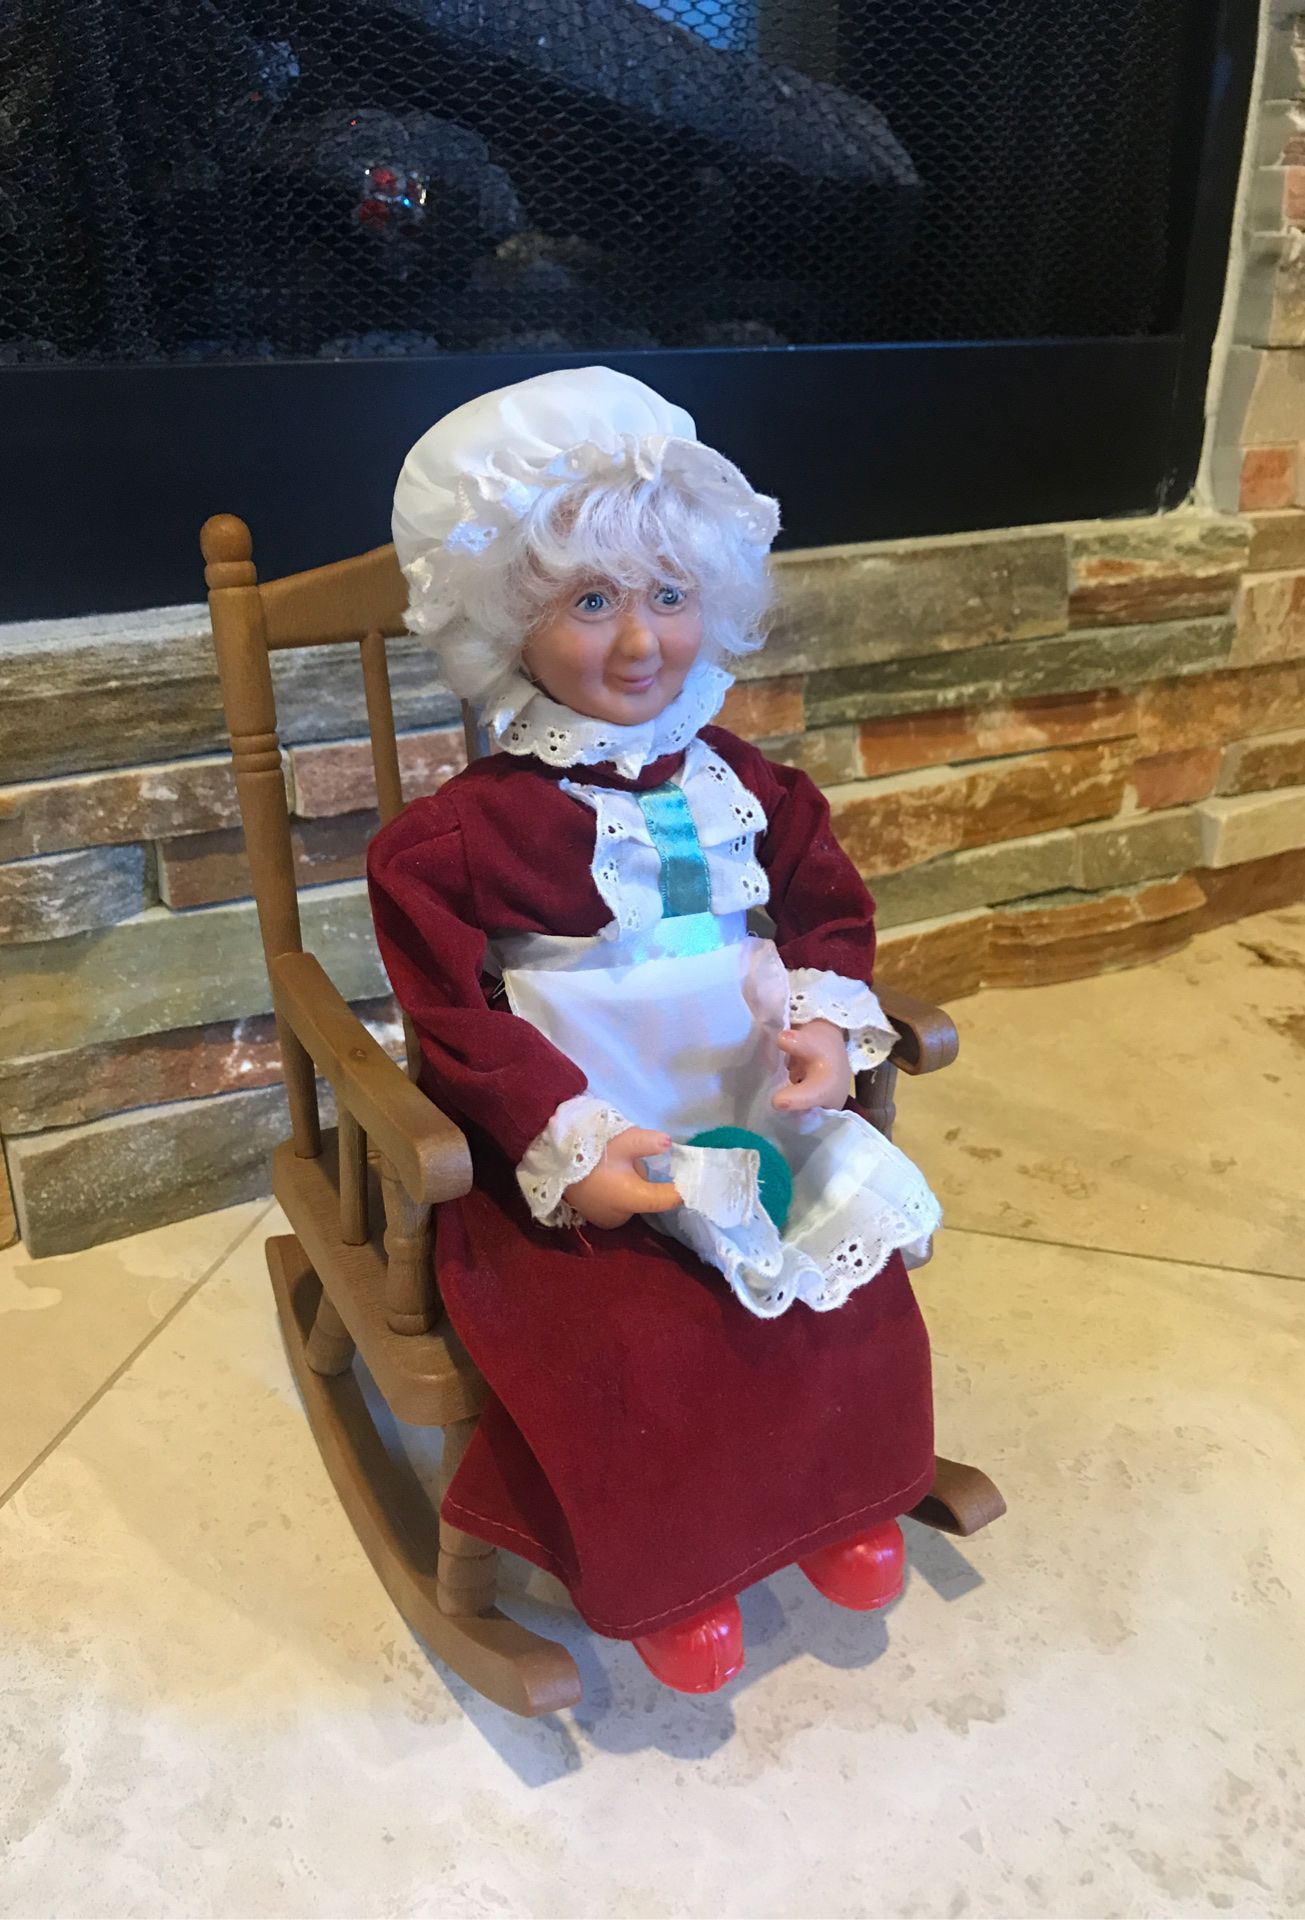 Cute grandma doll with Hammock chair